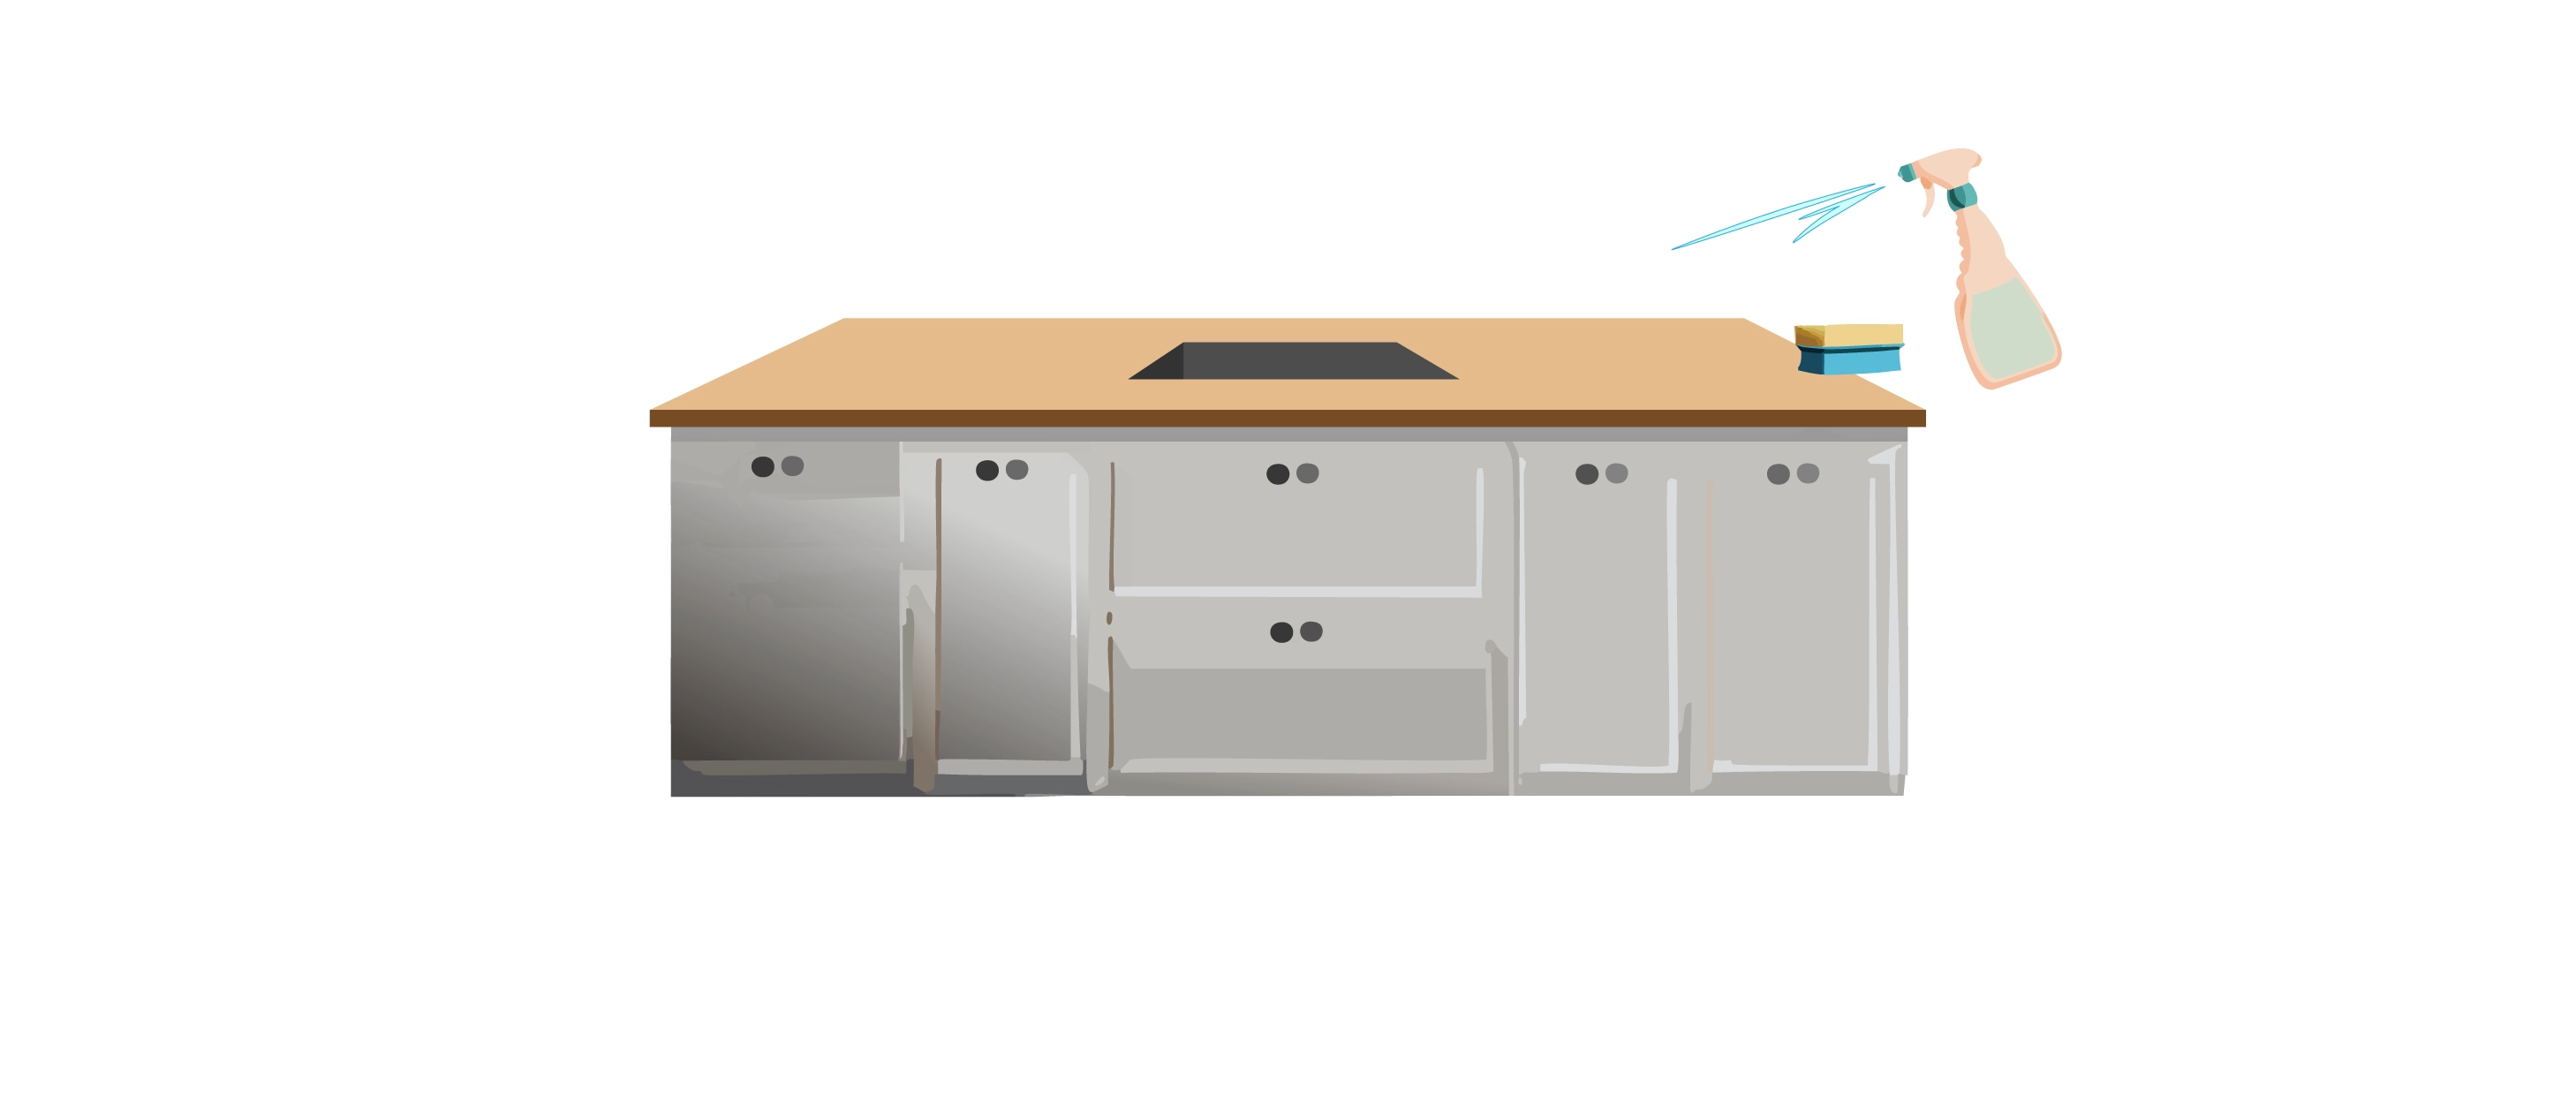 Resurface laminate countertop Step 1. Clean the Countertop